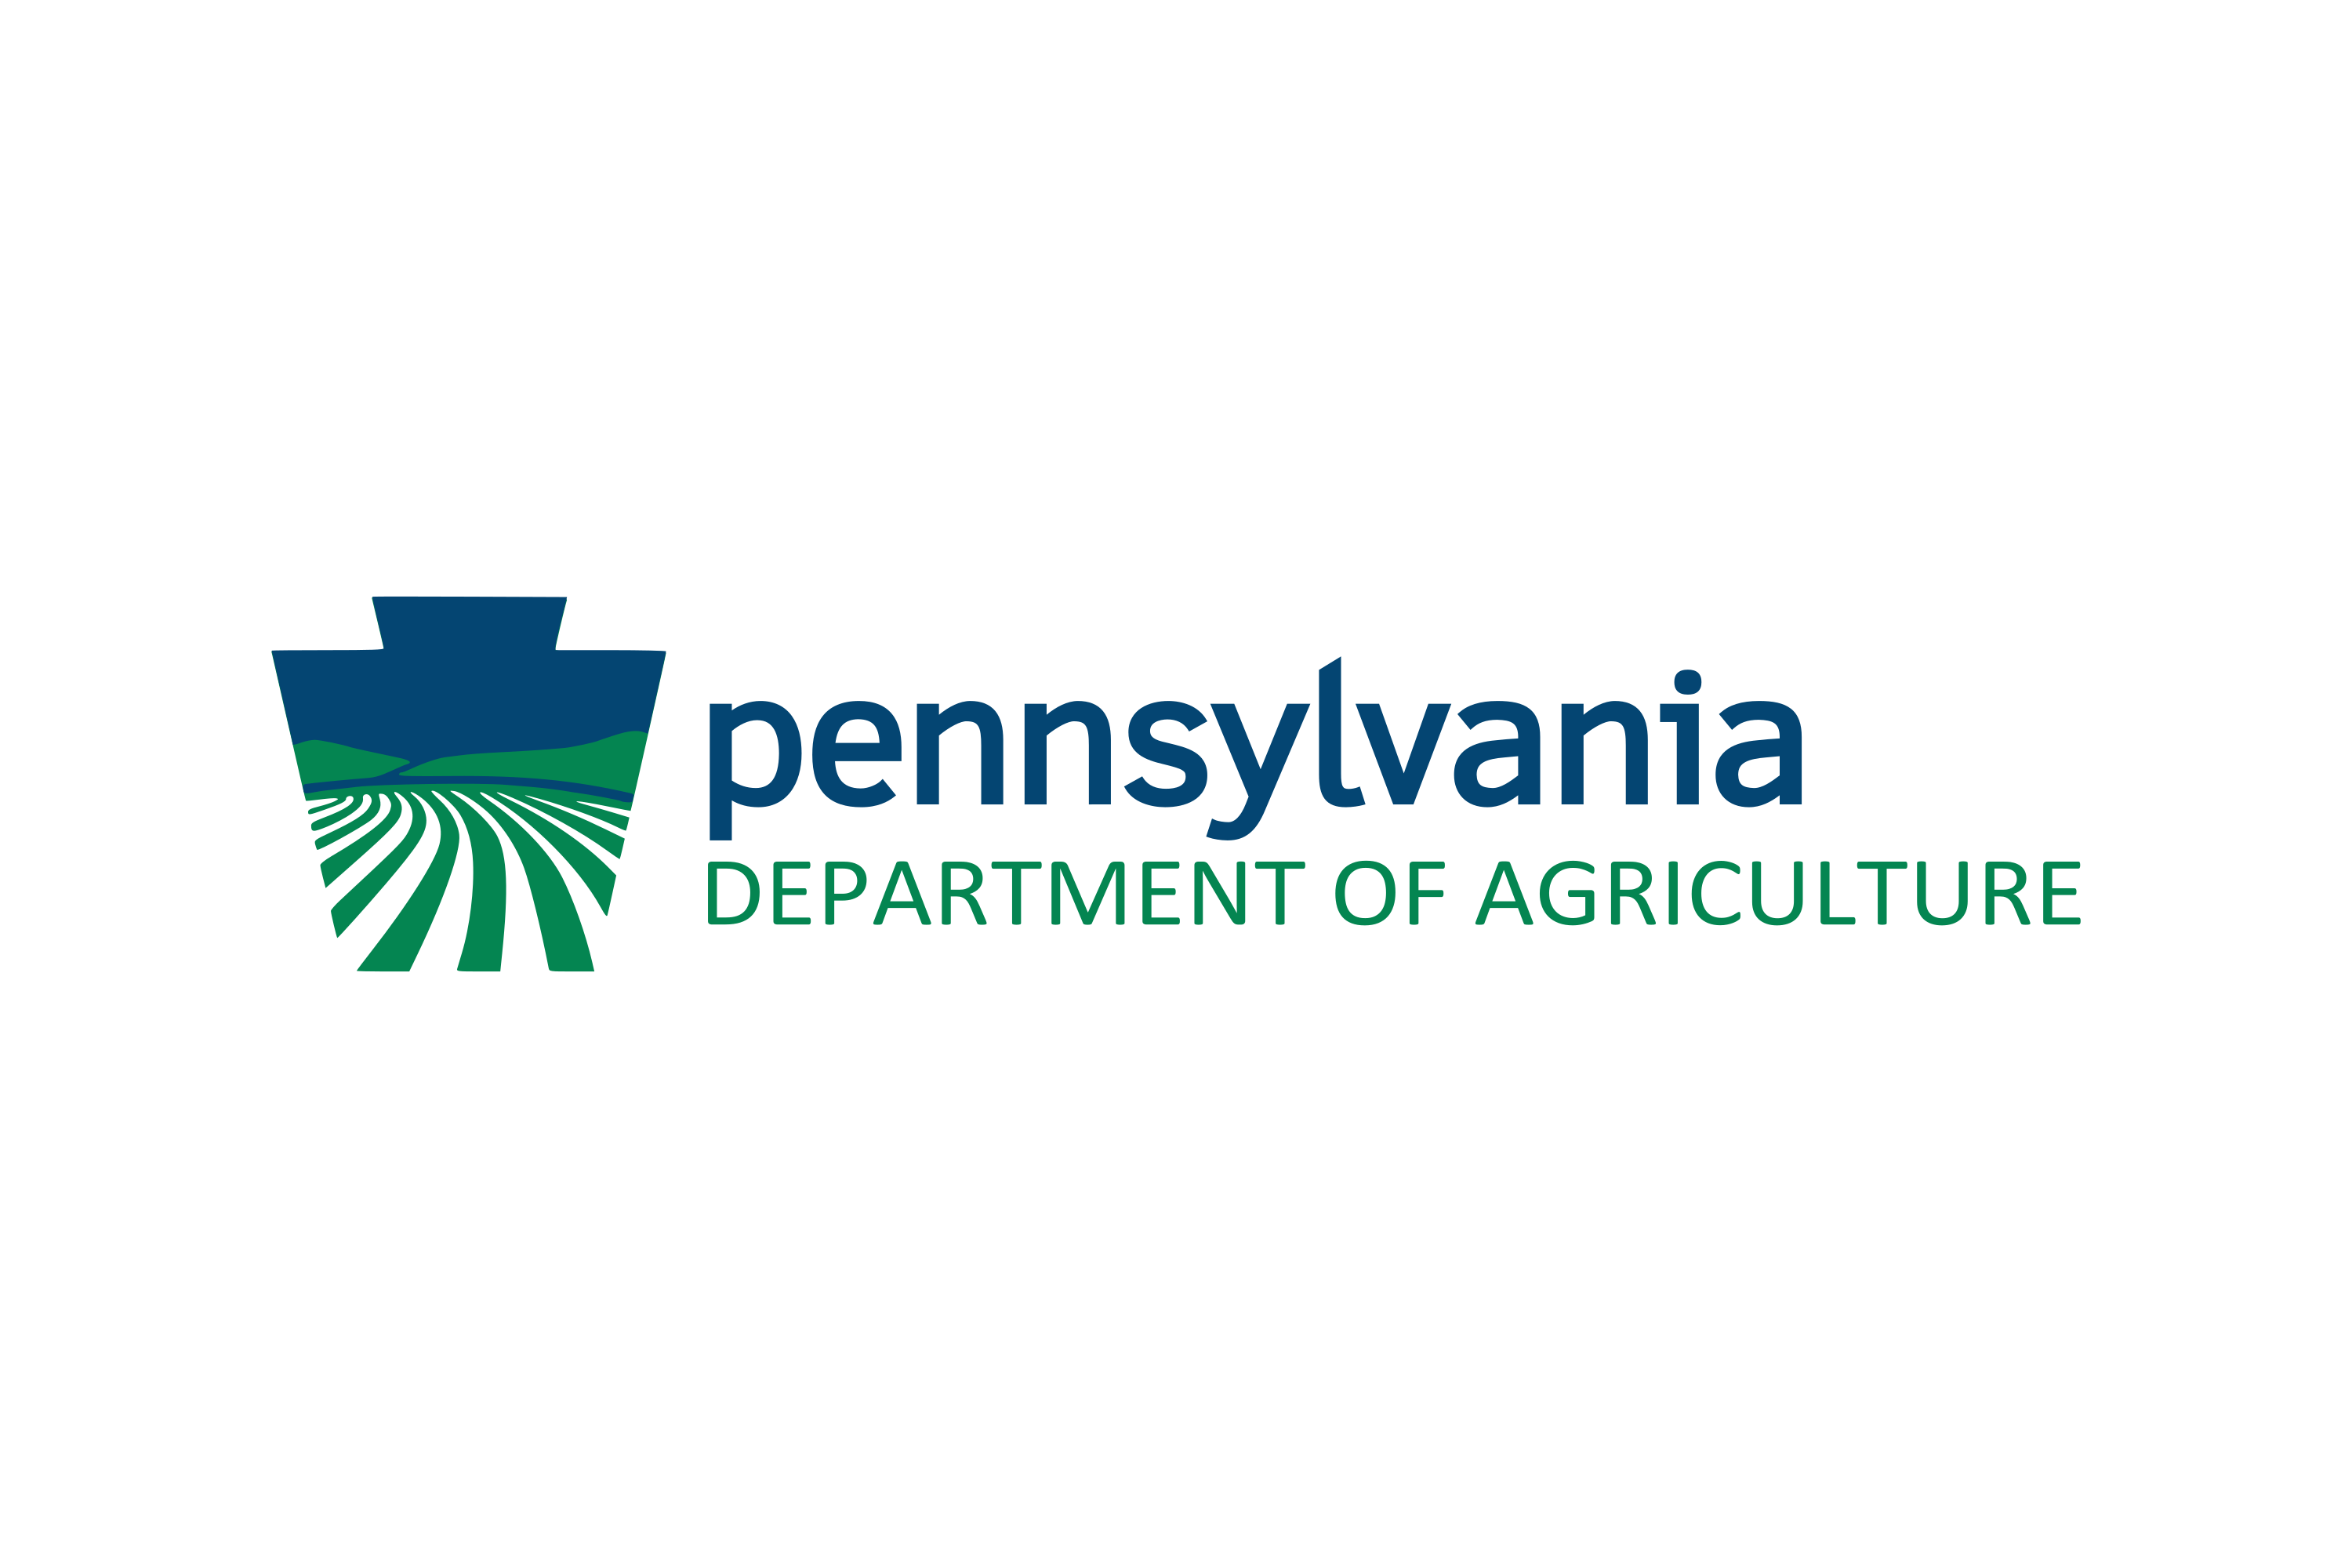 Pennsylvania Department of Agriculture Logo